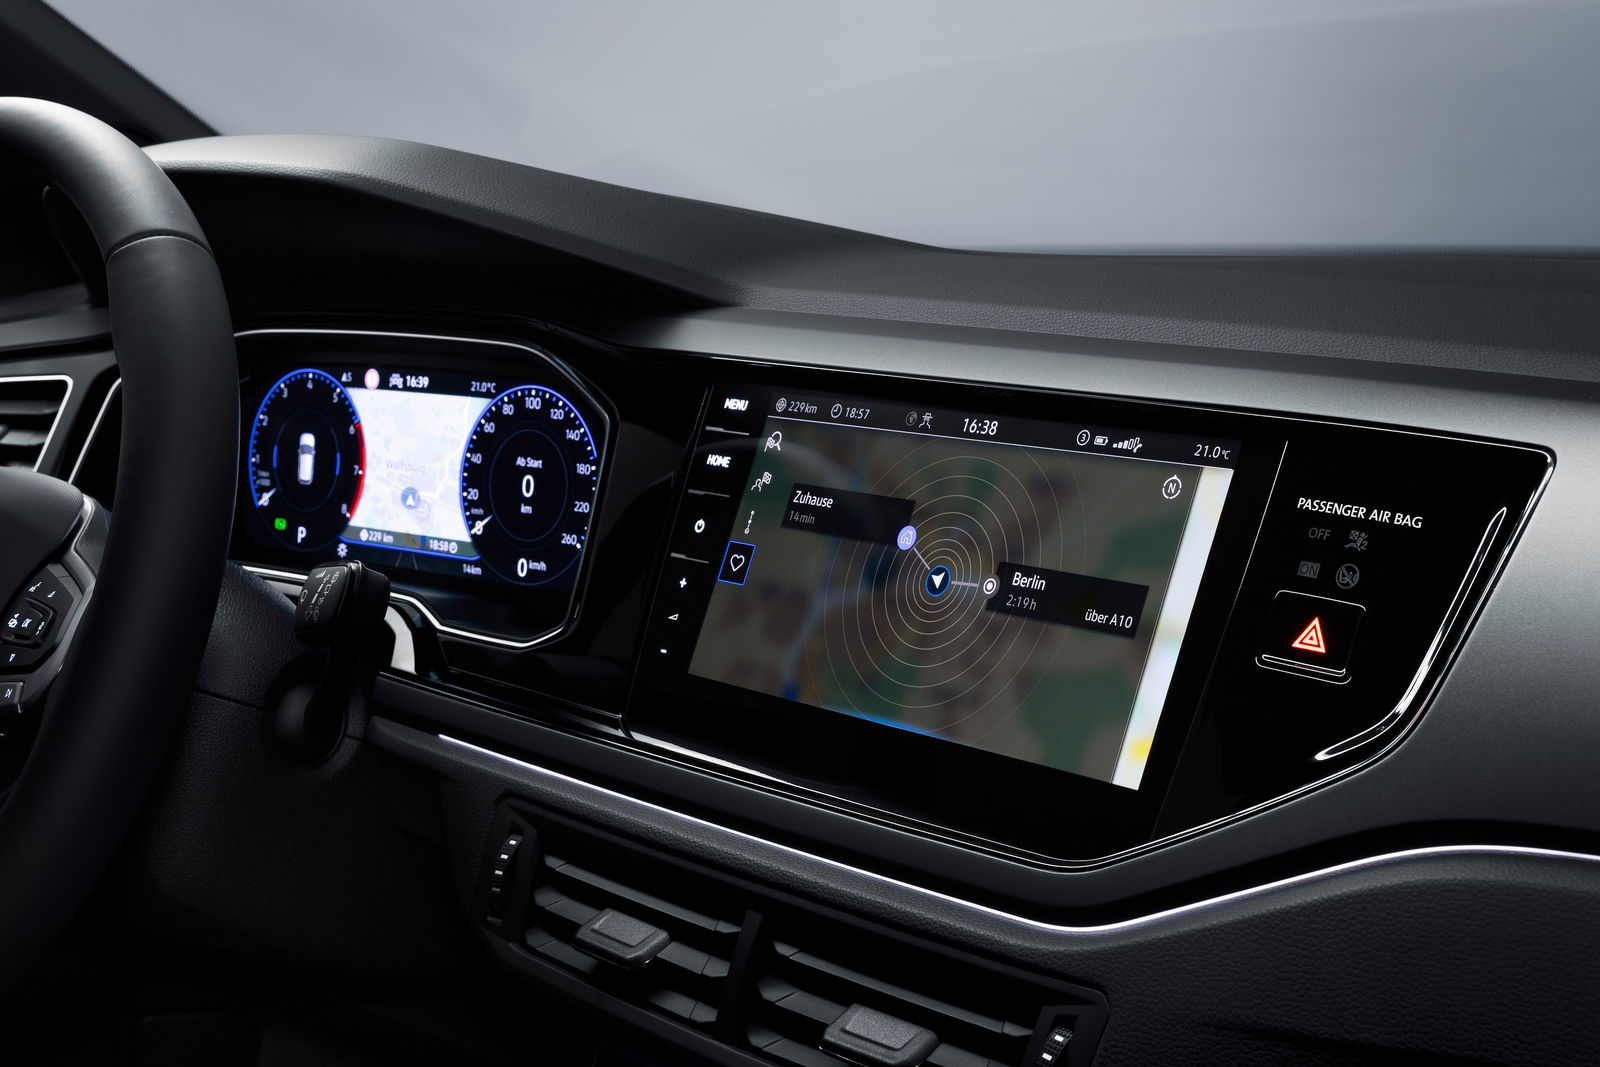 Abb. Infotainmentsystem mit Touchscreen in einem VW-Fahrzeug. Cockpit